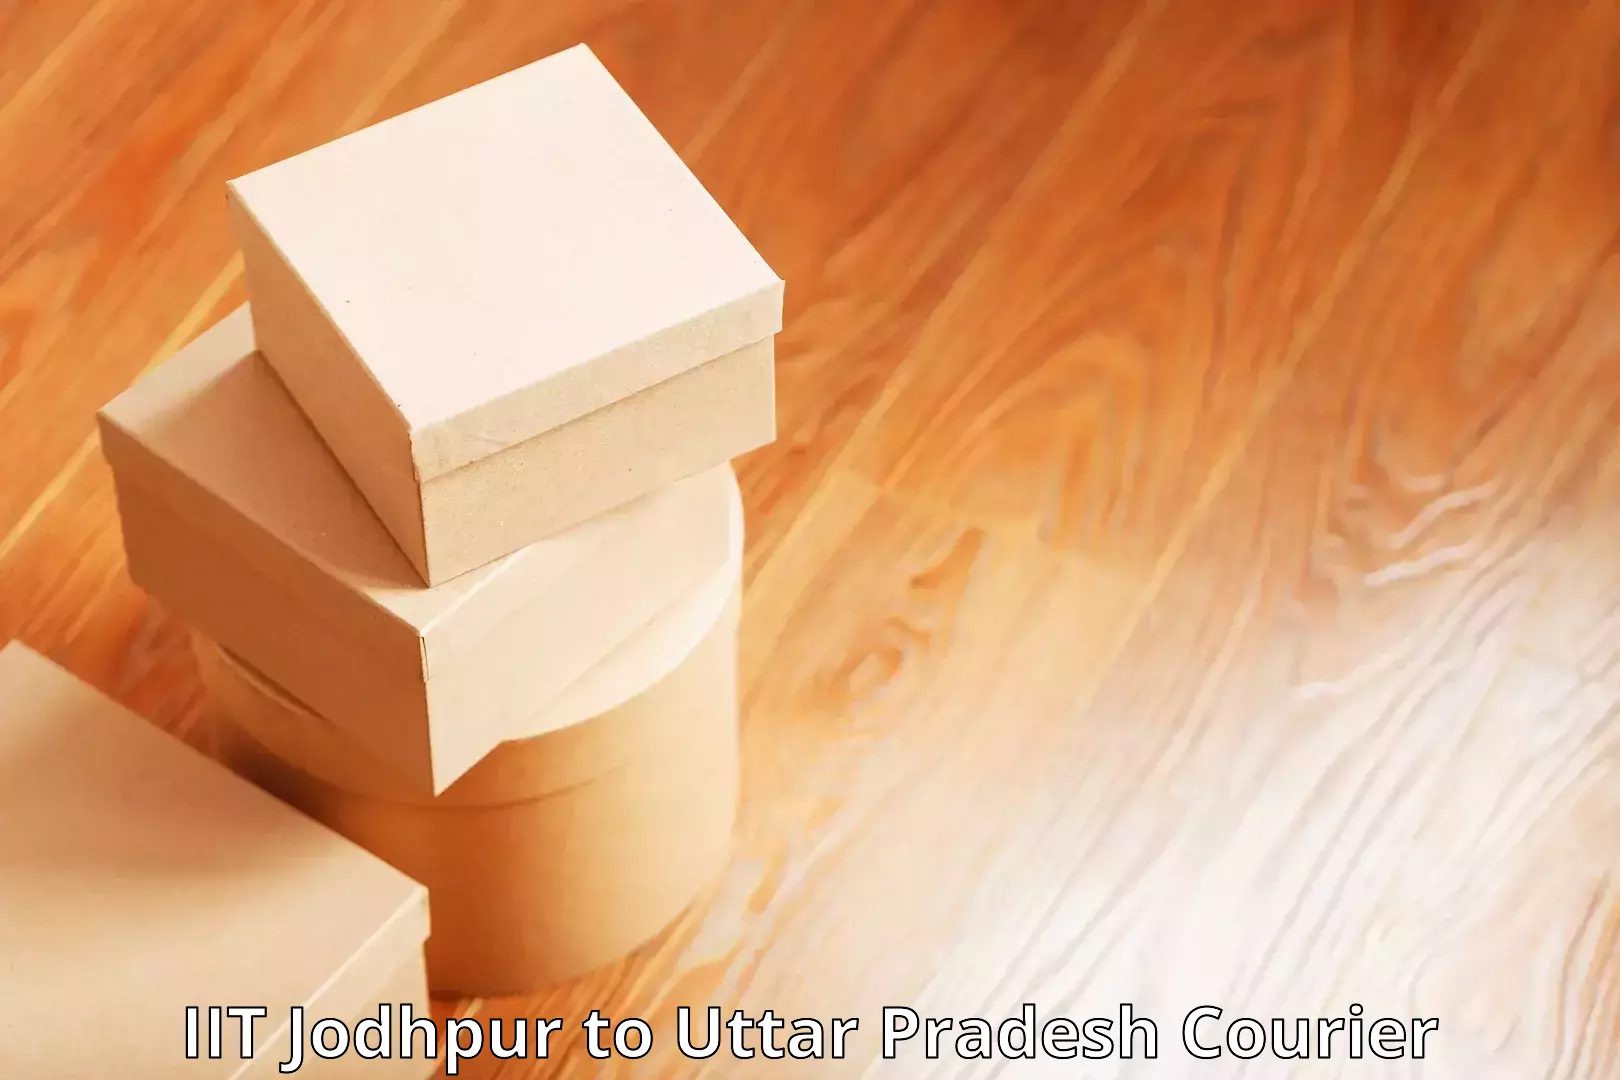 Budget-friendly shipping IIT Jodhpur to Meerut